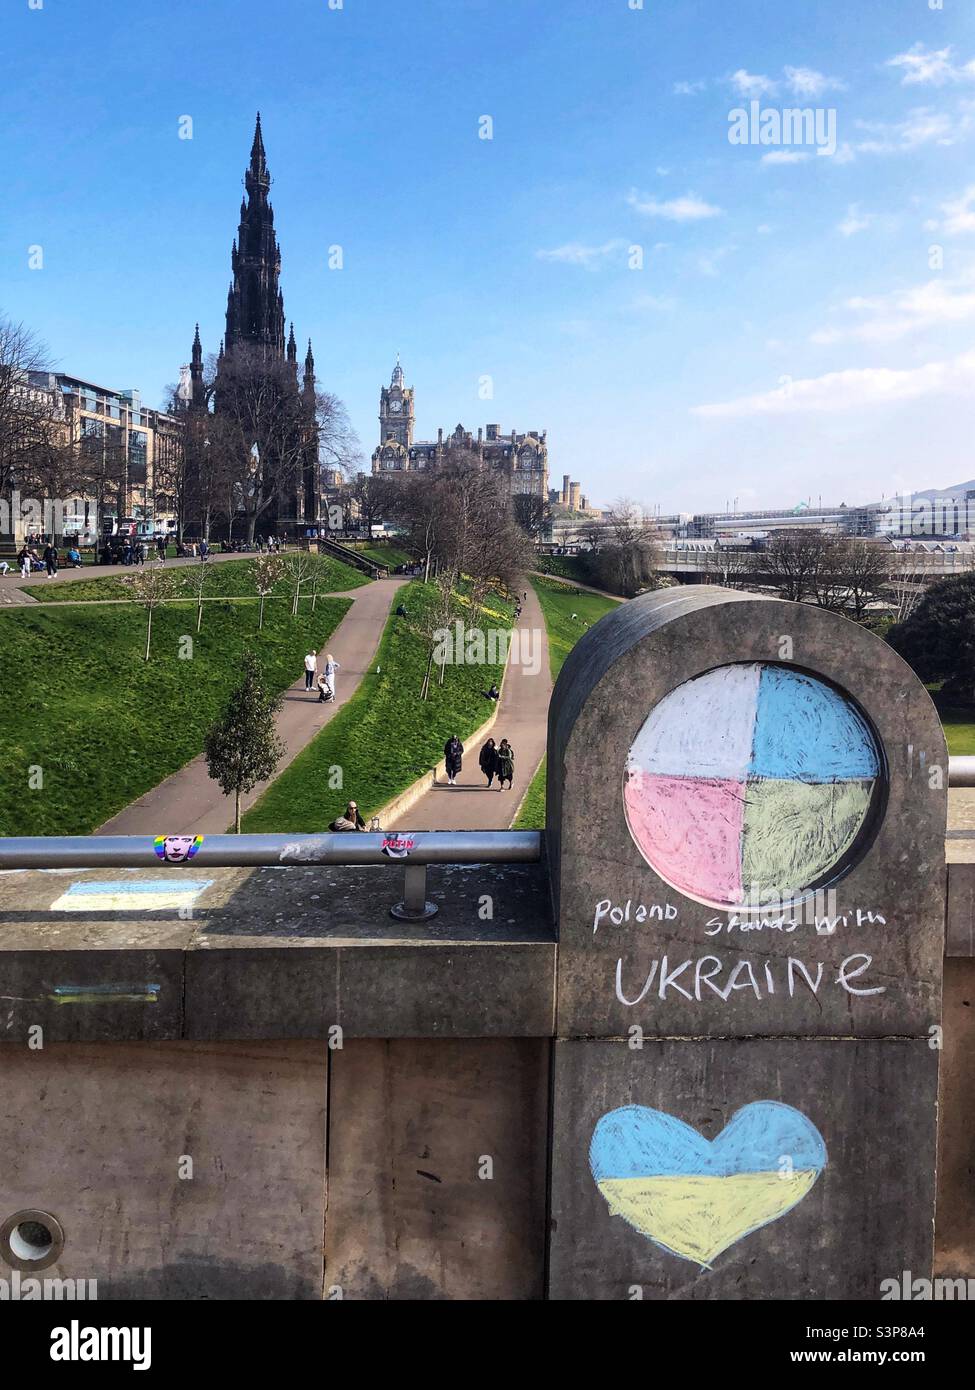 Poland stands with Ukraine Graffiti for the Russia Ukraine conflict at the mound, Edinburgh Scotland Stock Photo